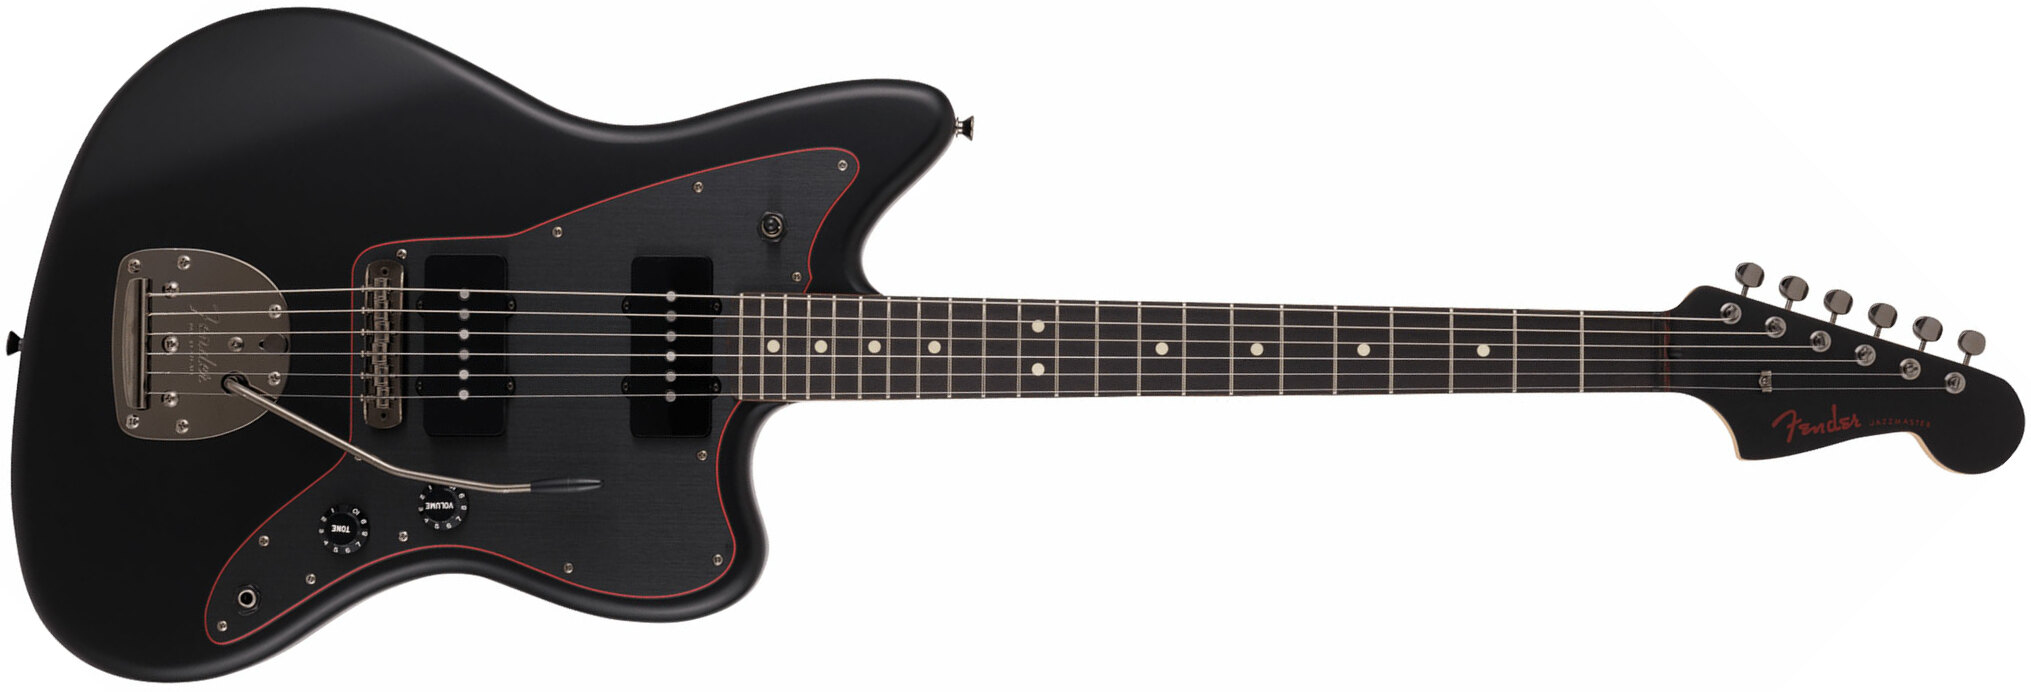 Fender Jazzmaster Hybrid Ii Jap 2s Trem Rw - Satin Black - Retro-rock elektrische gitaar - Main picture